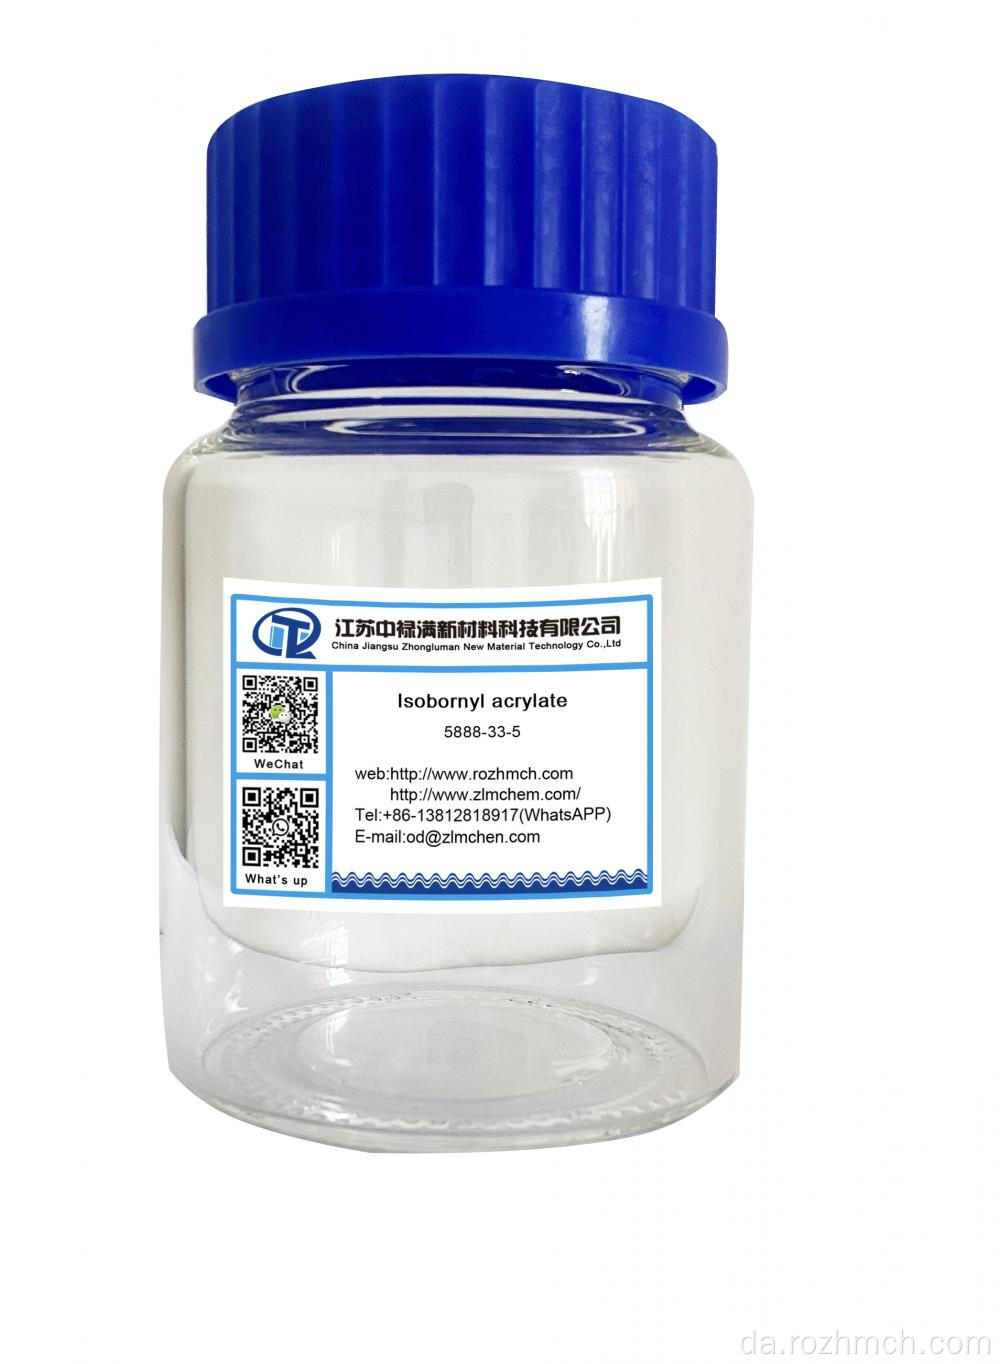 Isobornyl acrylat CAS nr. 5888-33-5